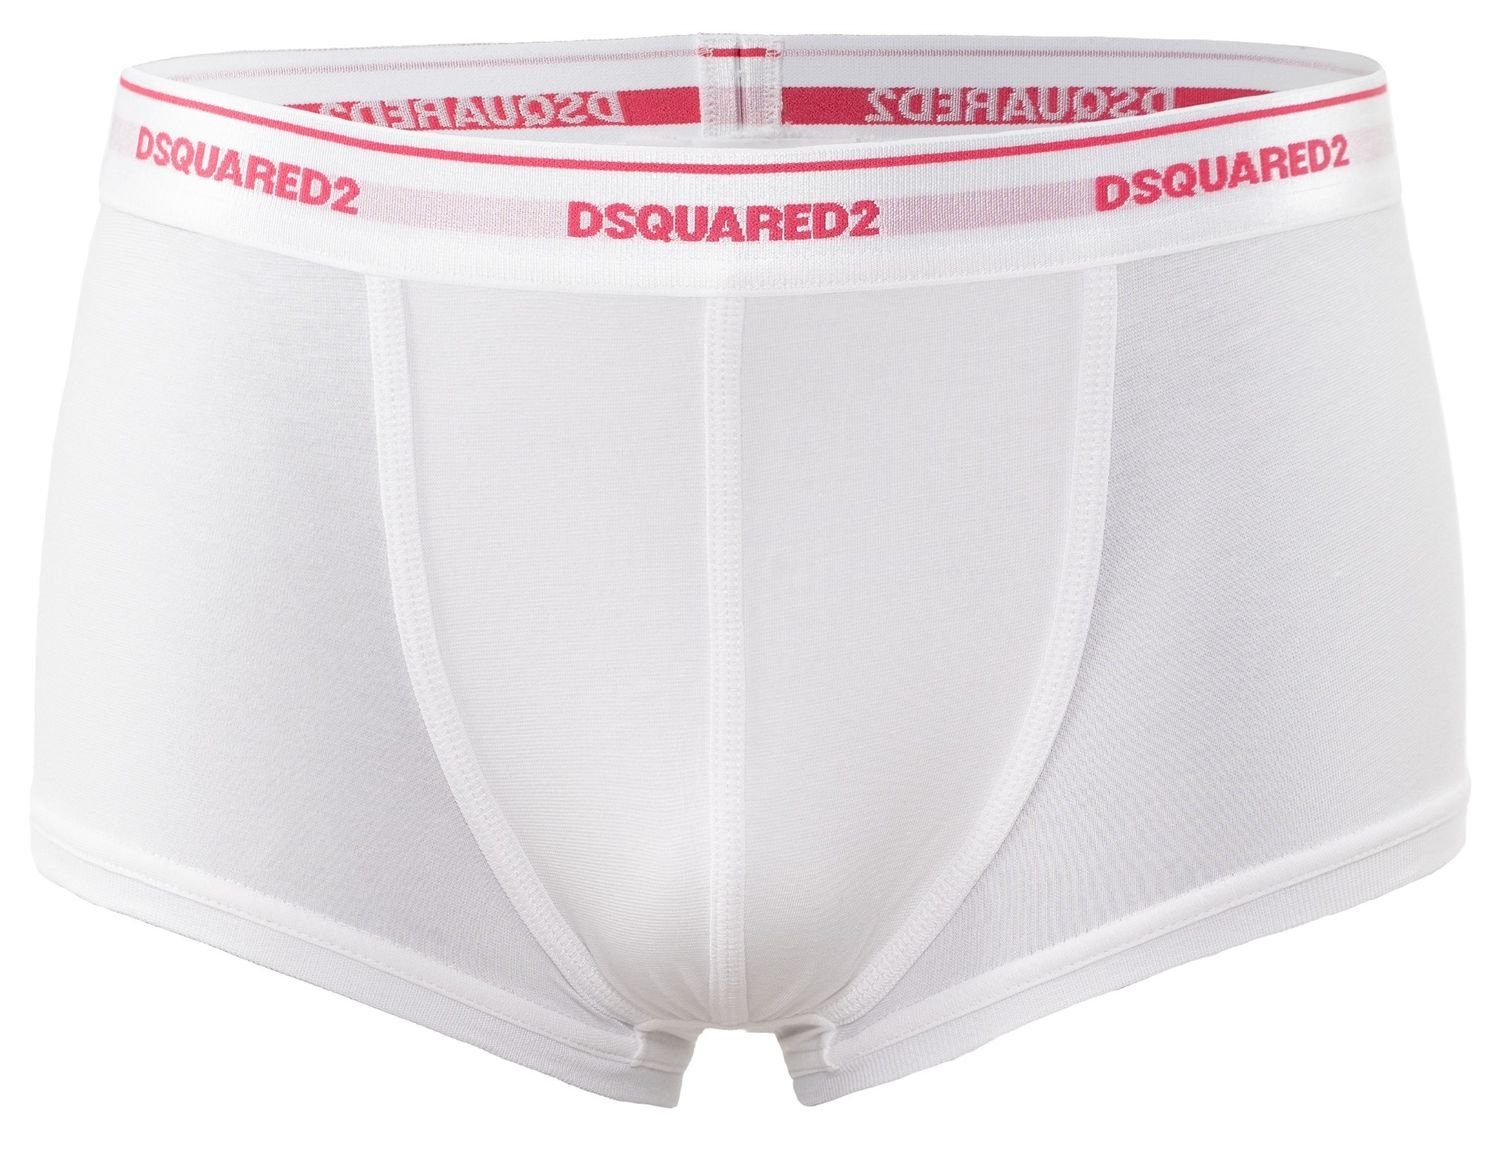 Dsquared2 Trunk Dsquared2 Boxershorts / Pants / Shorts / Boxer in weiß Größe S / M / L / XL / XXL (1-St)